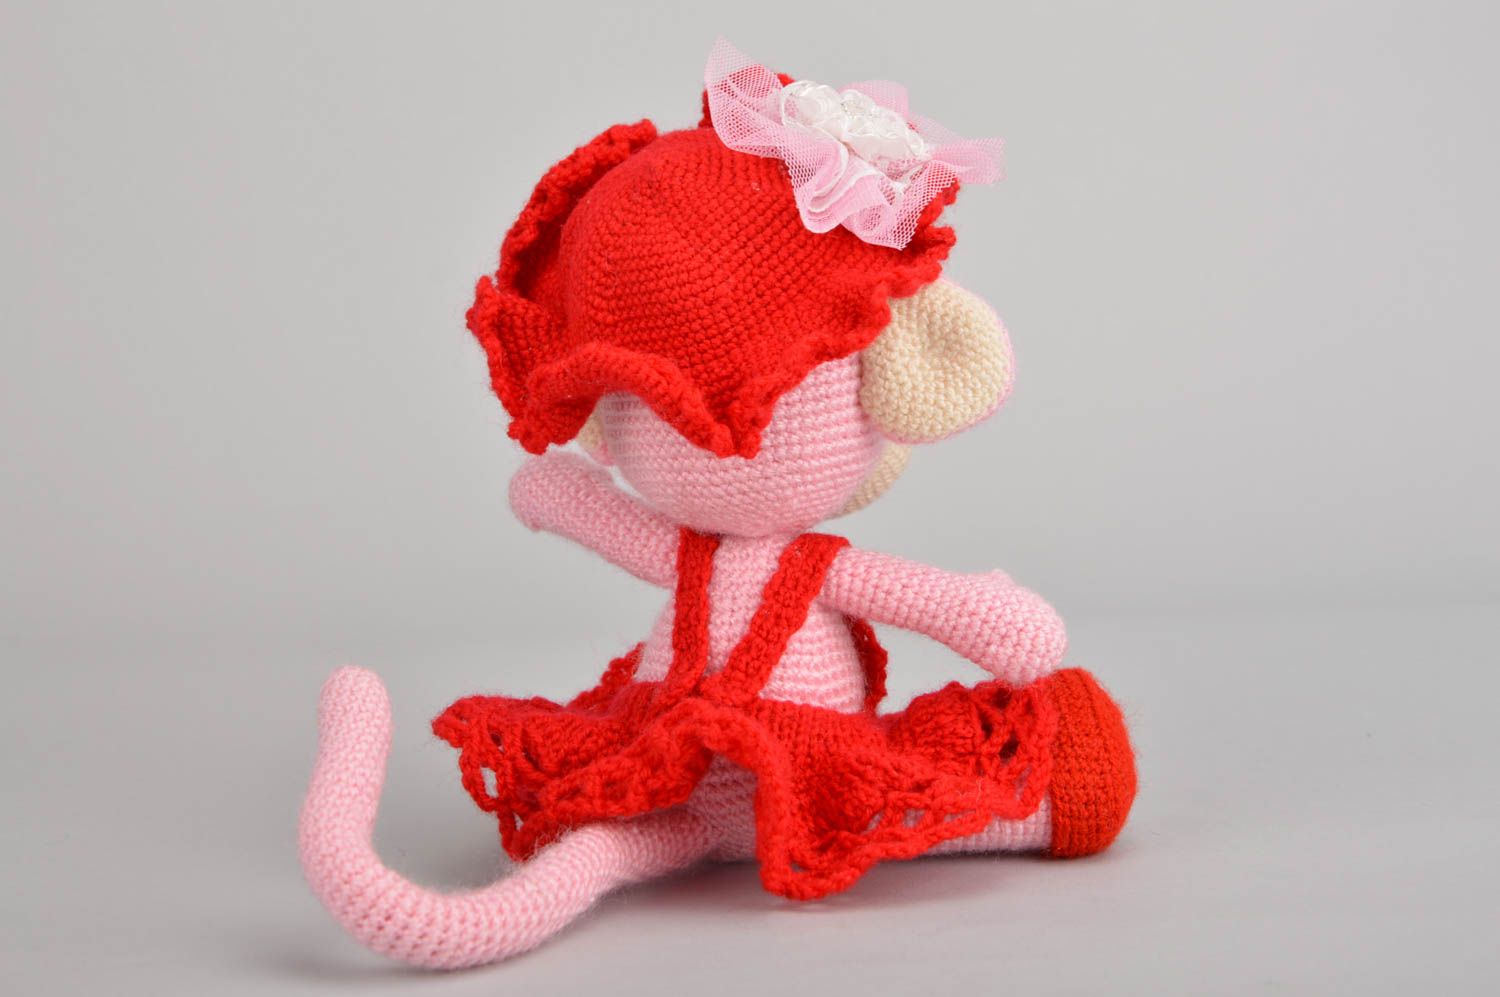 Beautiful homemade crochet toy handmade soft toy for kids nursery design photo 5